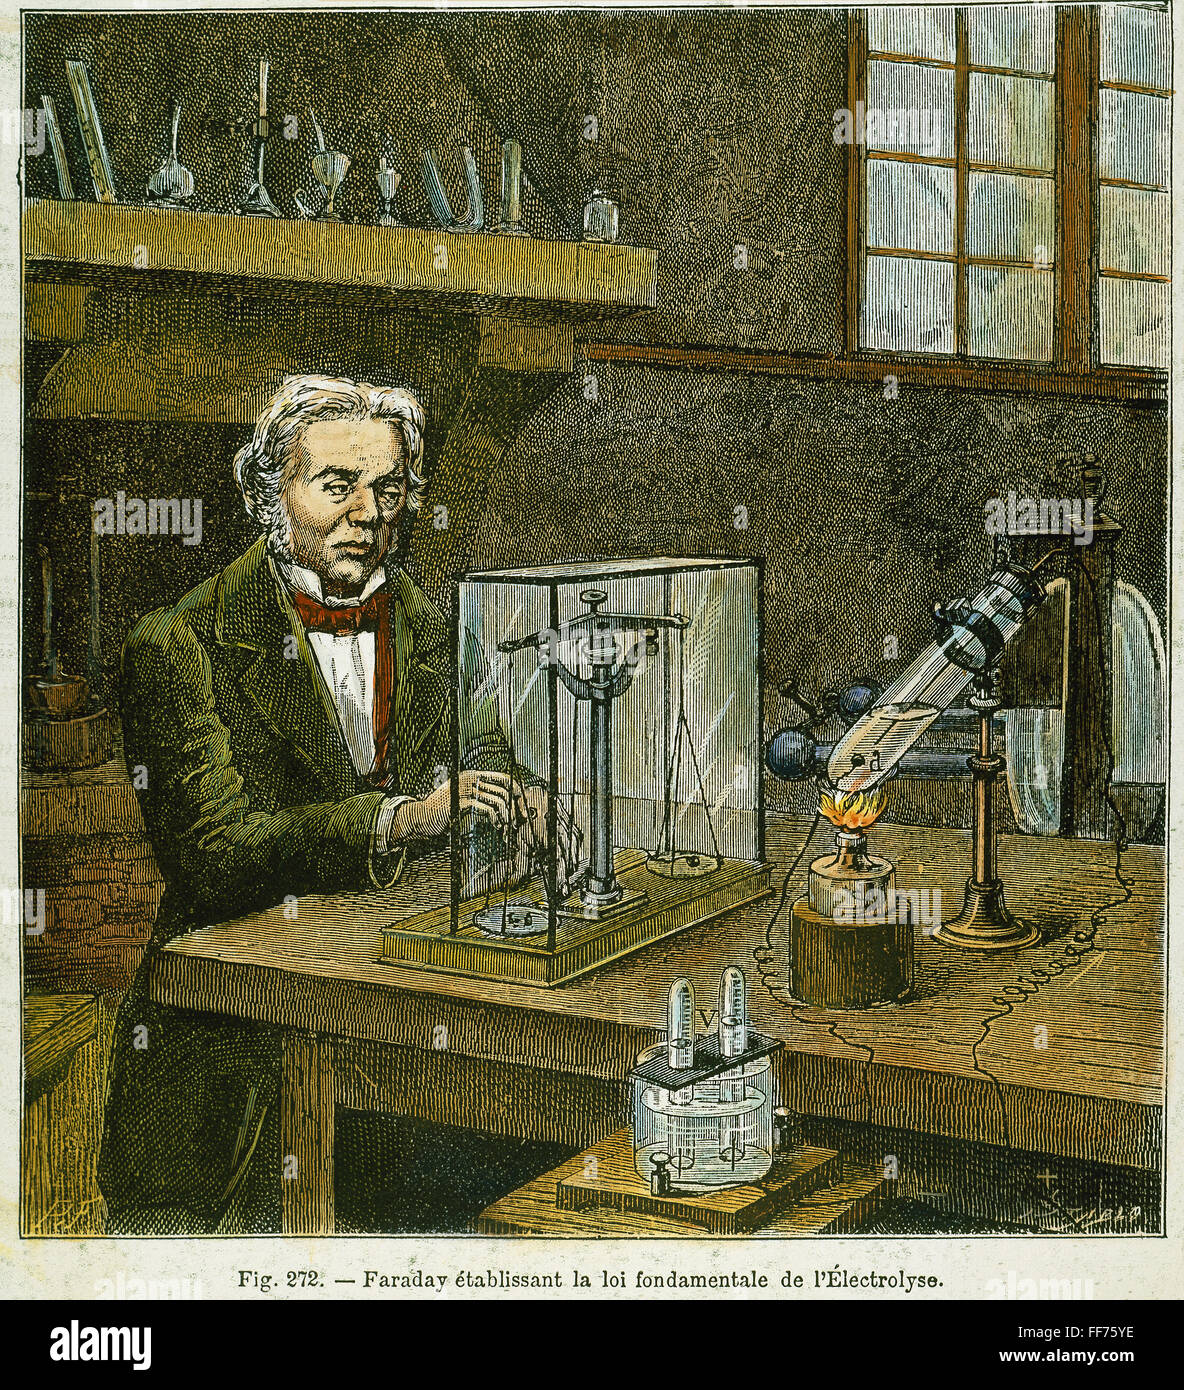 MICHAEL FARADAY (1791-1867) /nestablishing the fundamental law of electrolysis: colored engraving, 19th century. Stock Photo